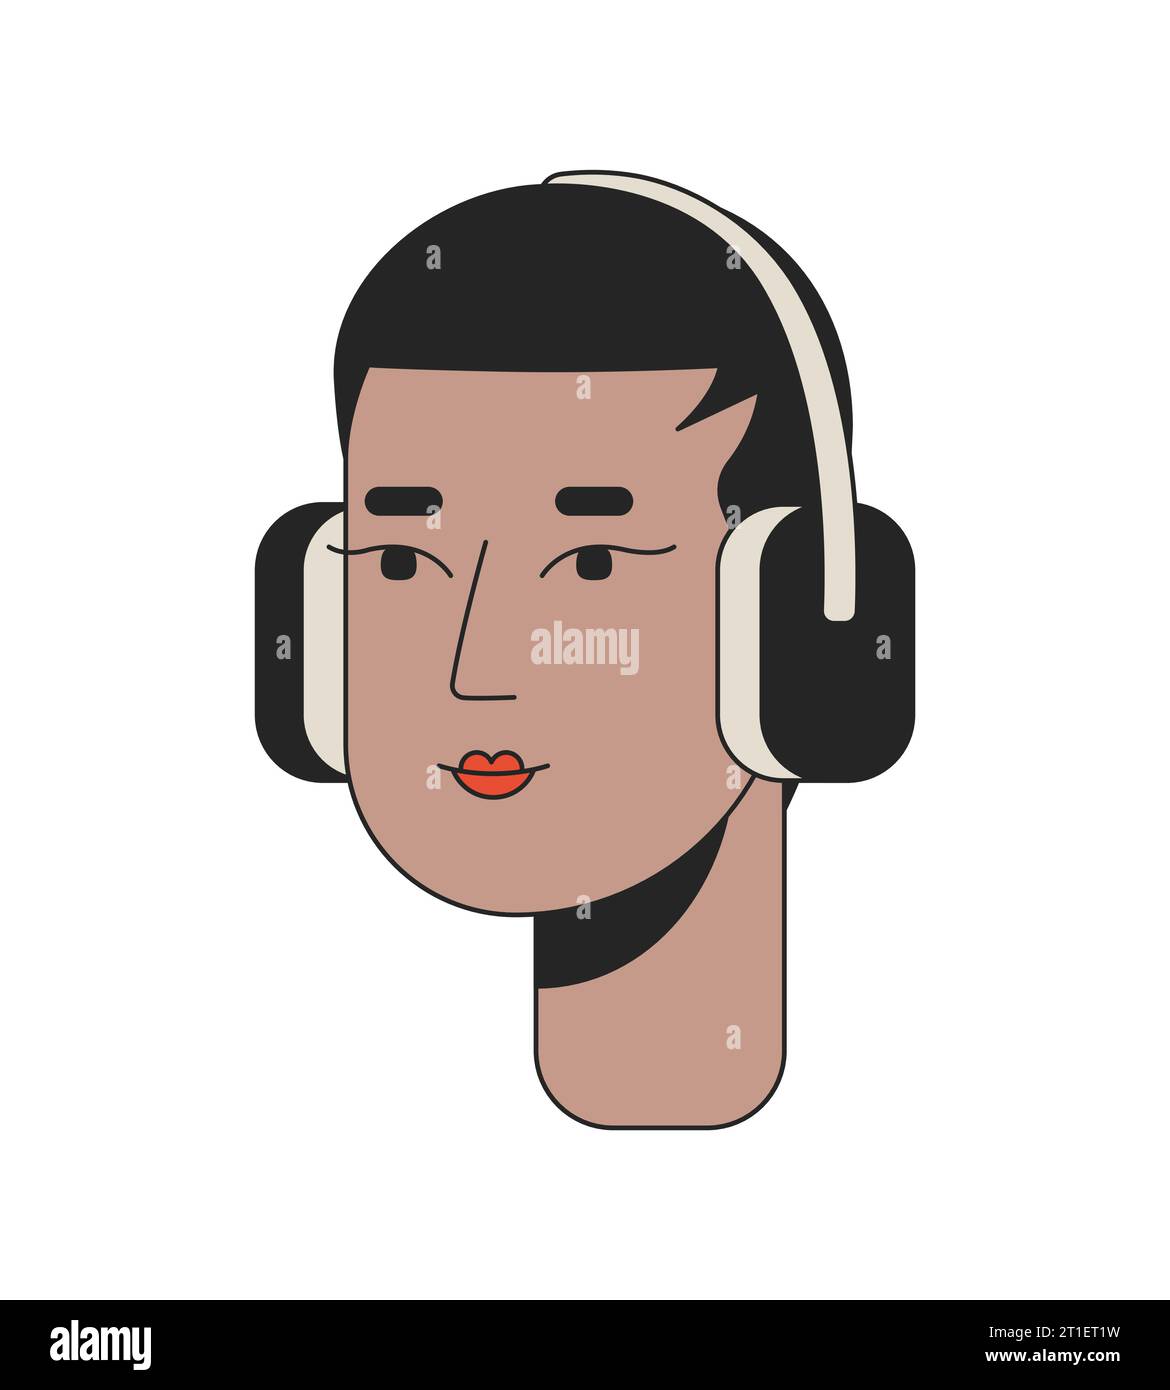 Black Short Haired Woman Wearing Headphones 2d Linear Cartoon Character